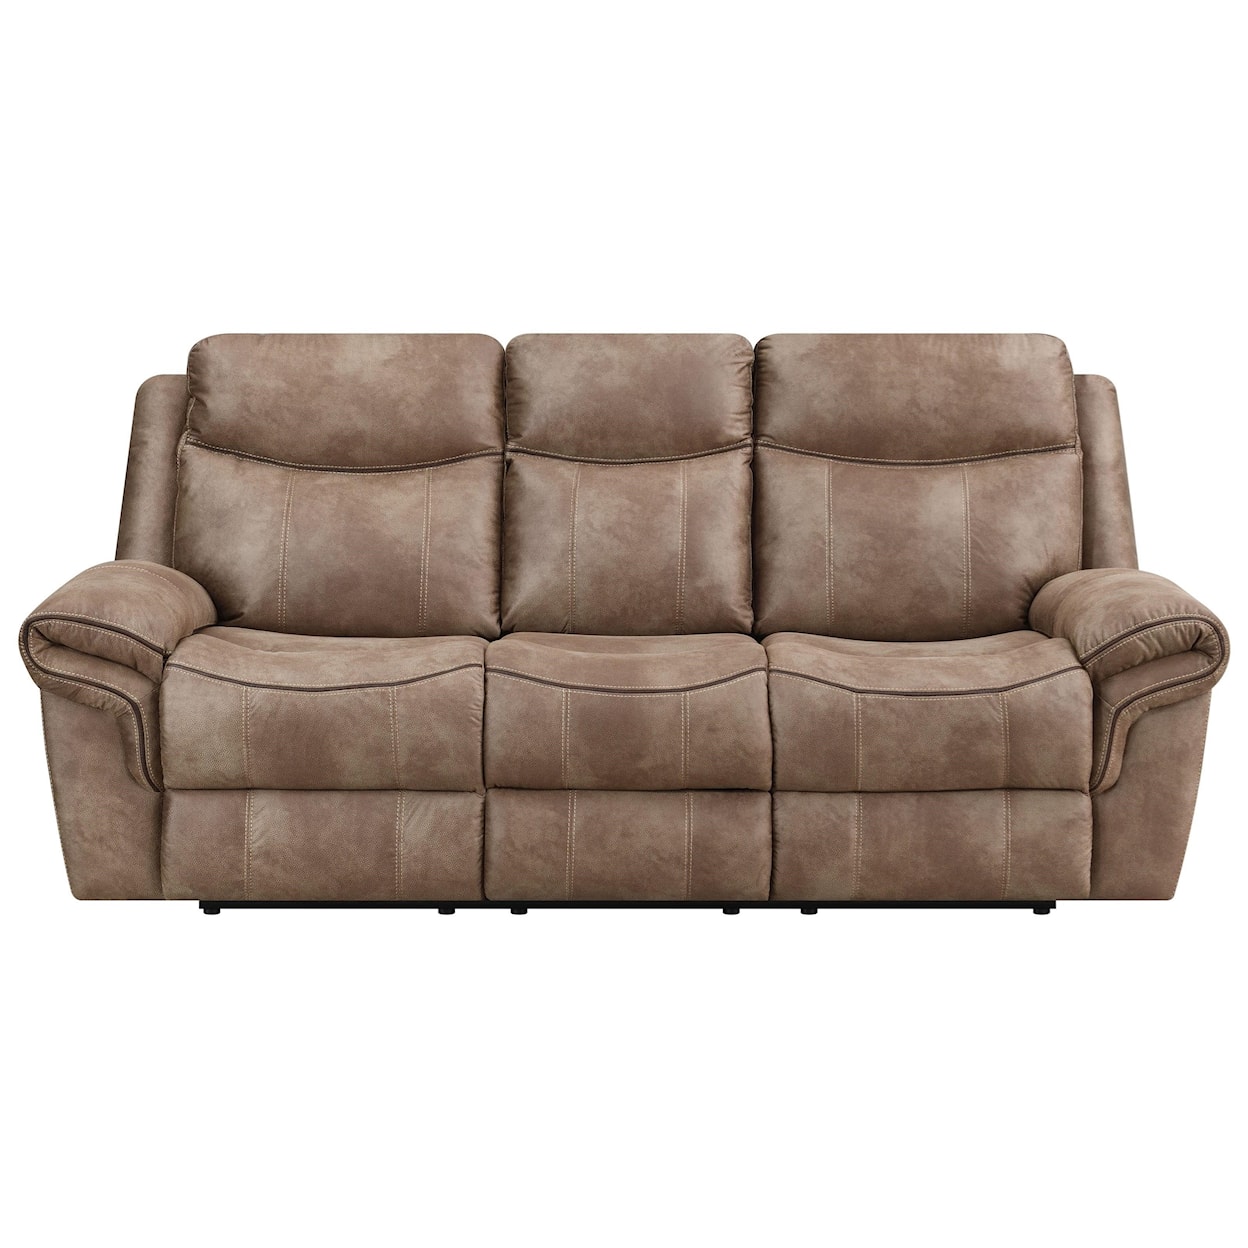 Prime Nashville Recliner Sofa